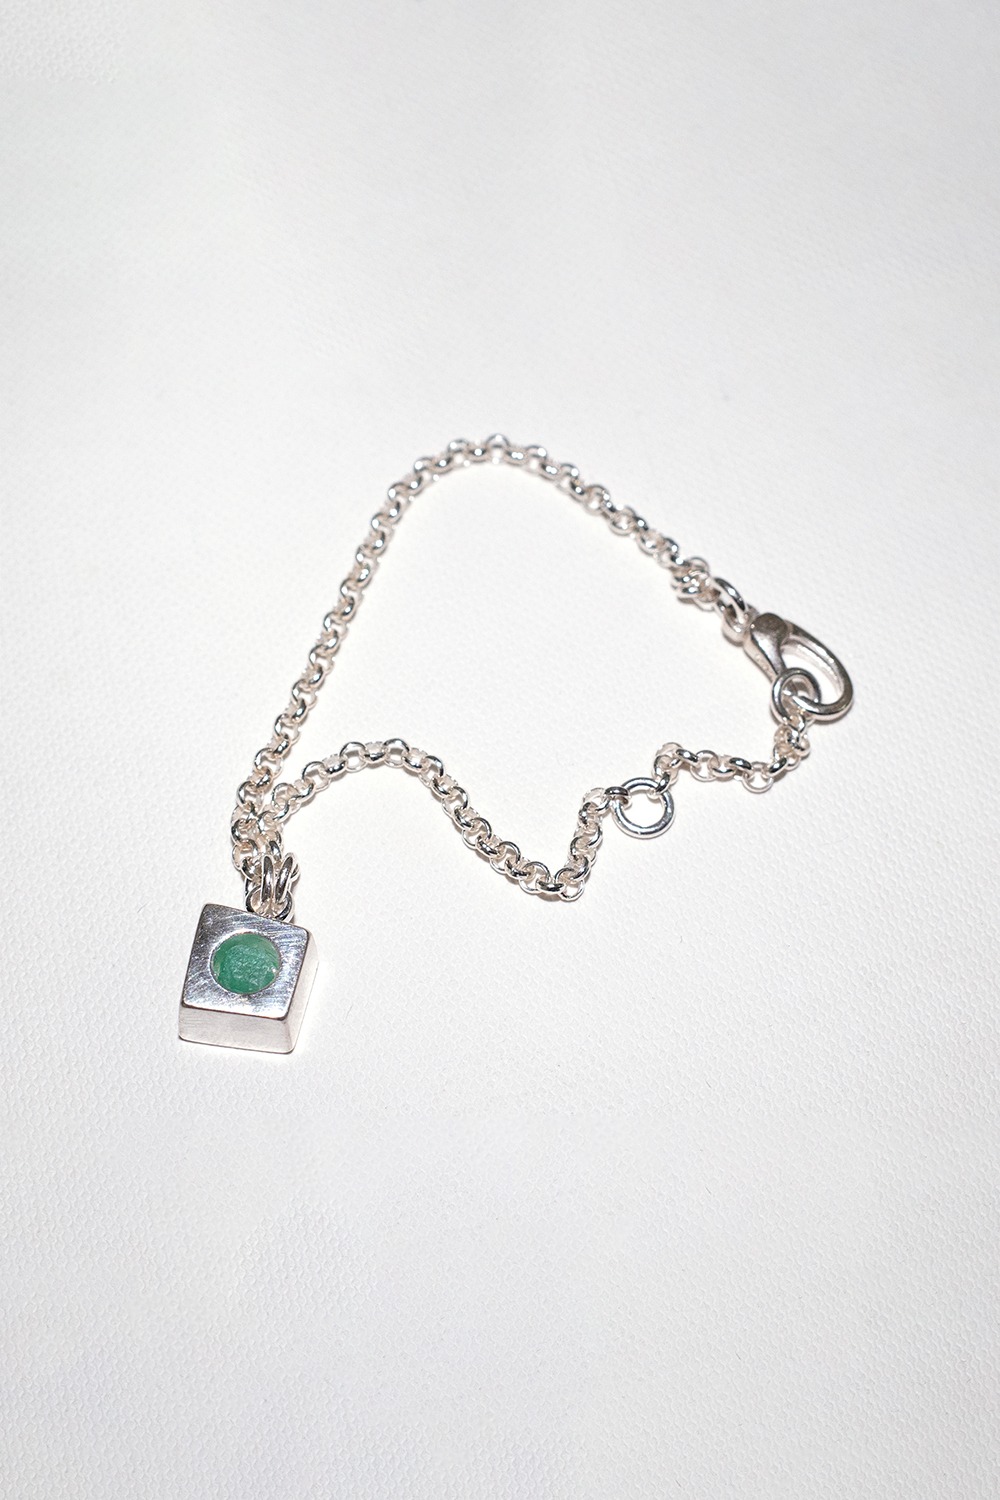 HOTDRYGREY_Emerald charm bracelet